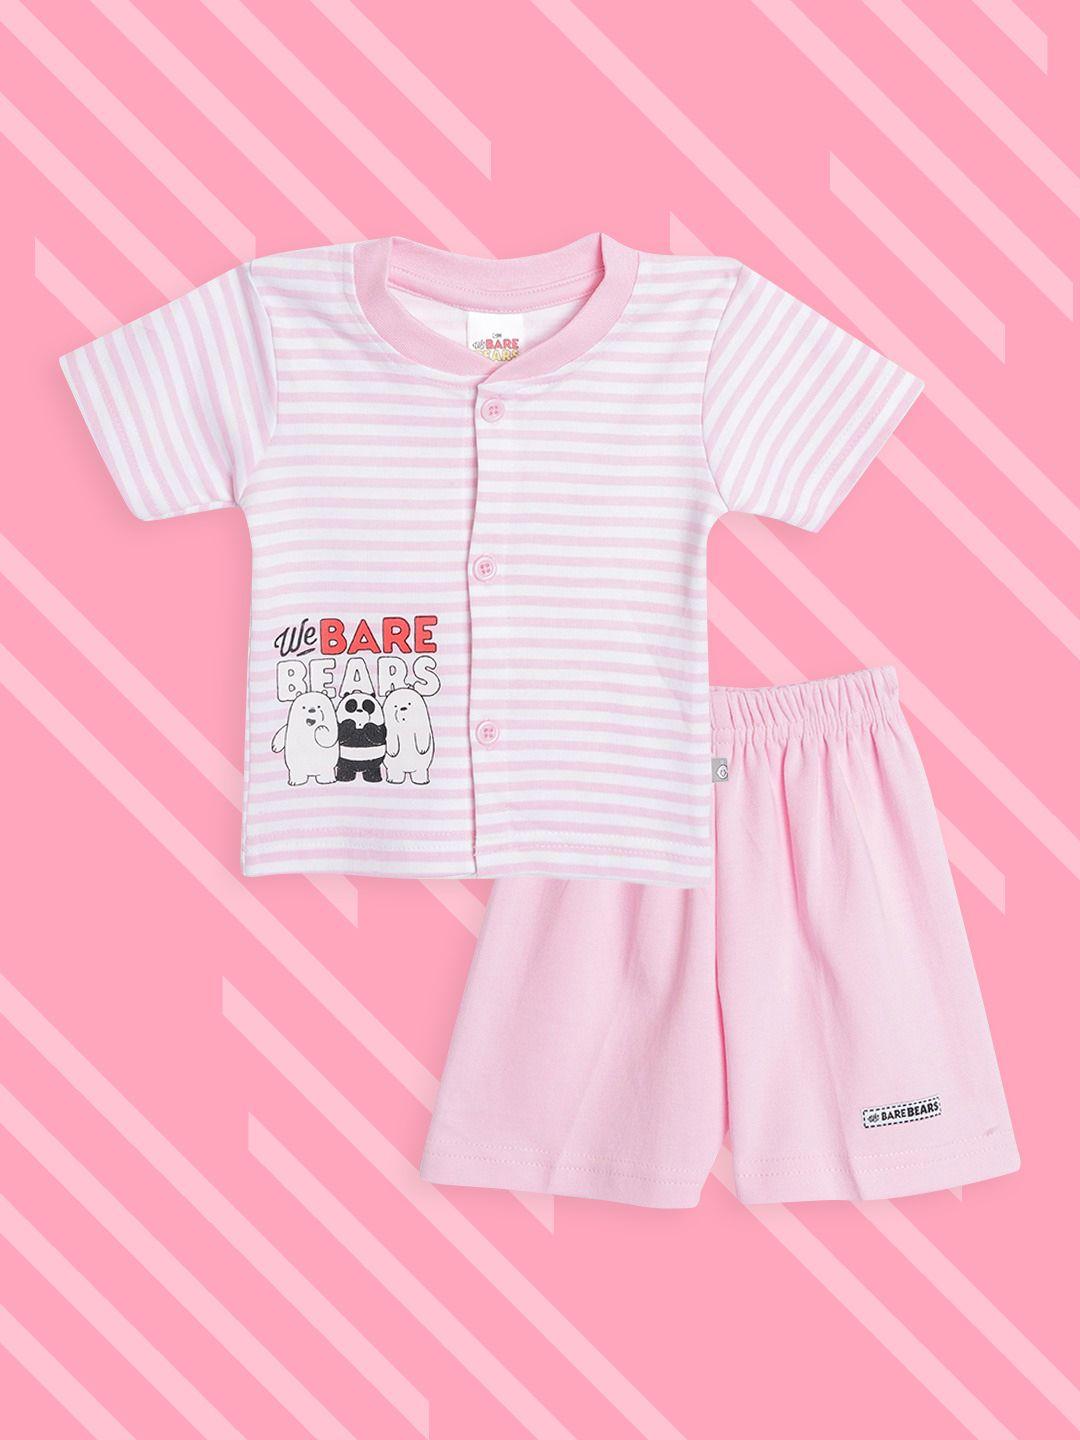 tinyo infant white & pink striped & we bare bears print cotton clothing set